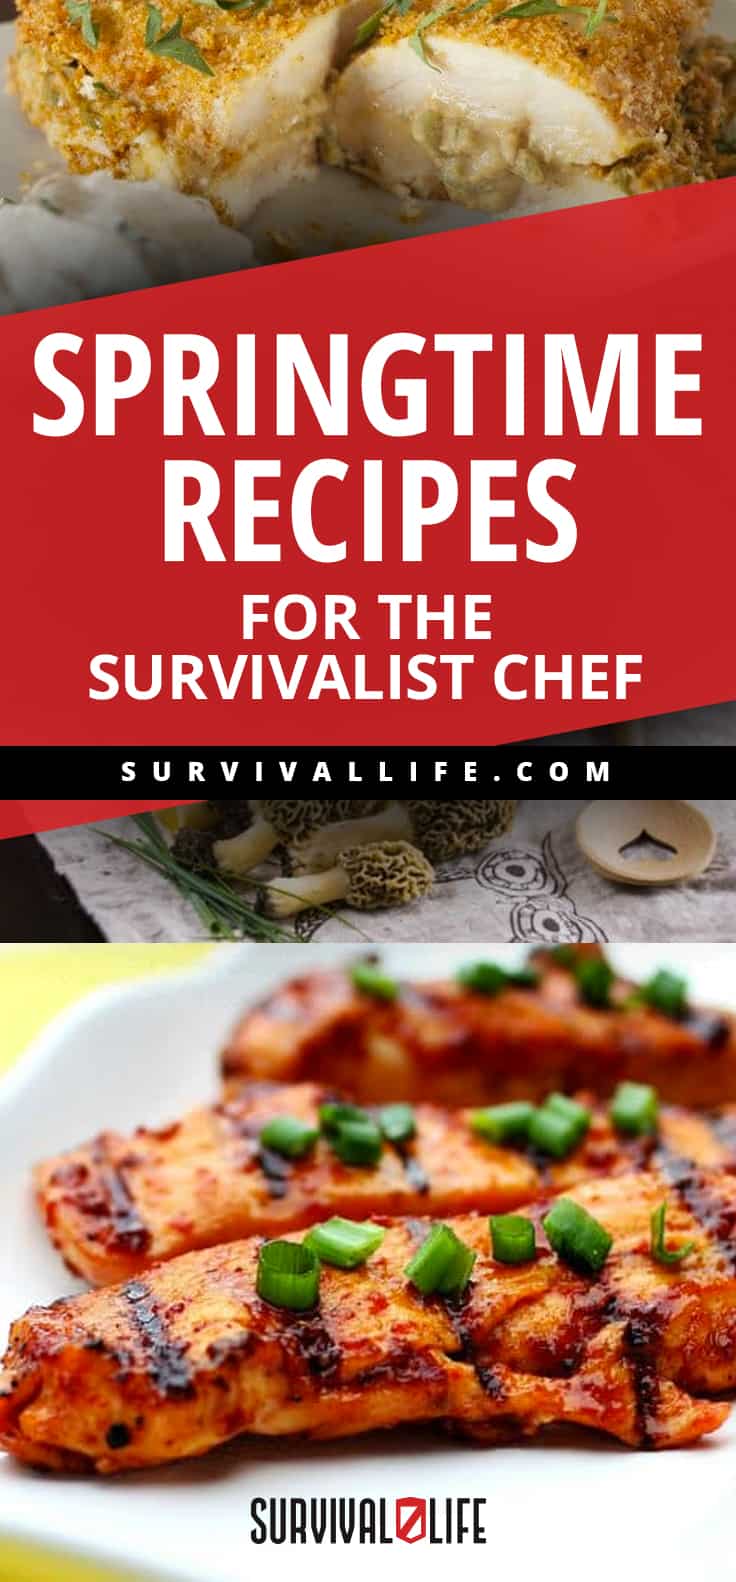 Springtime Recipes For The Survivalist Chef